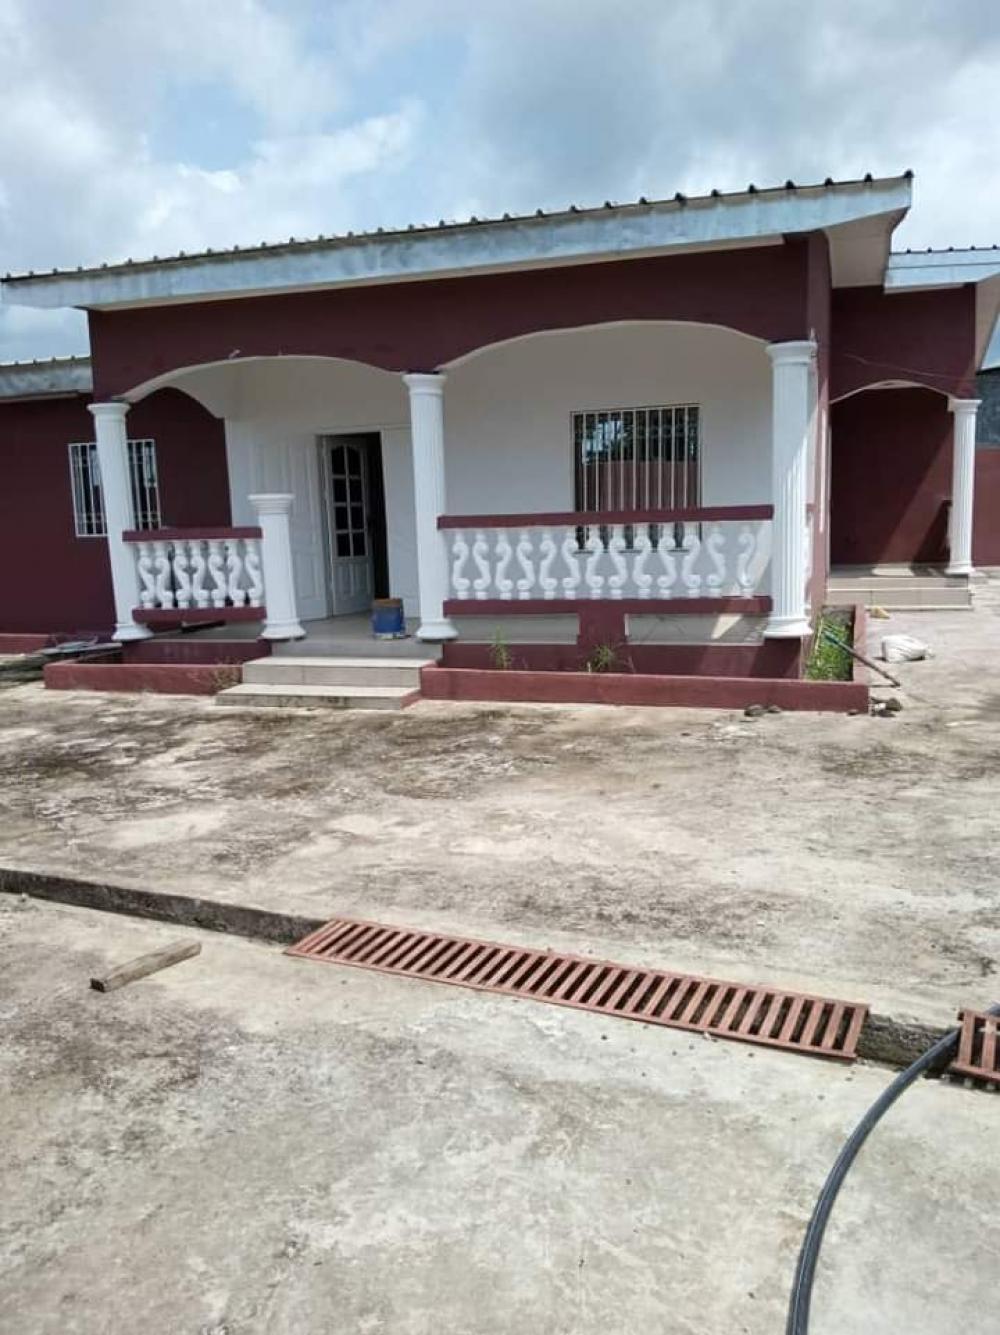 Villa 3 chambres à louer à Akanda, Angondjé. Prix: 350 000 FcfaPhoto Annonce Gabonhome 0